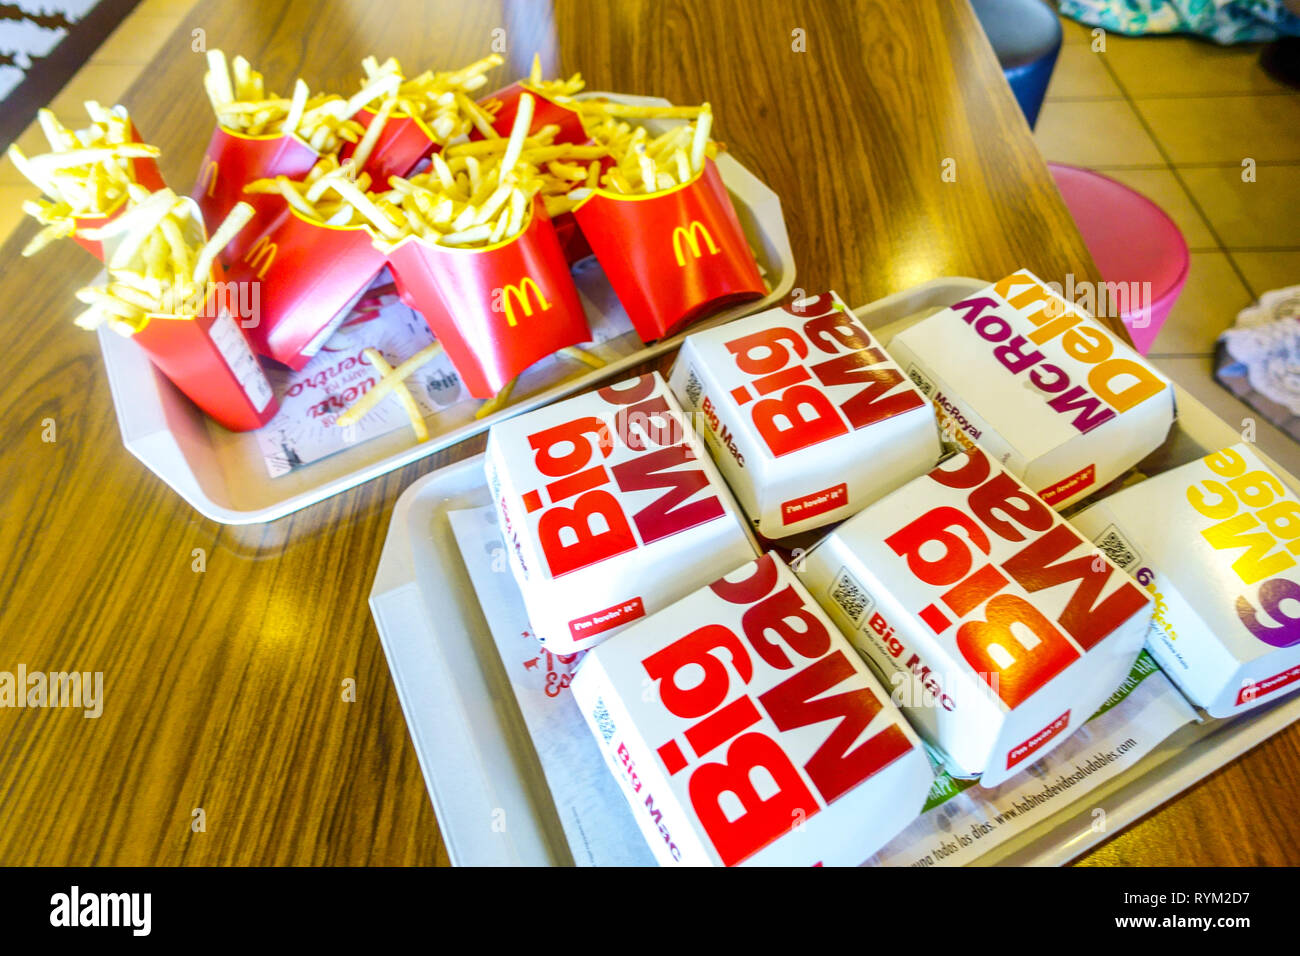 Mcdonalds Big Mac box meal French fries, Spain Stock Photo